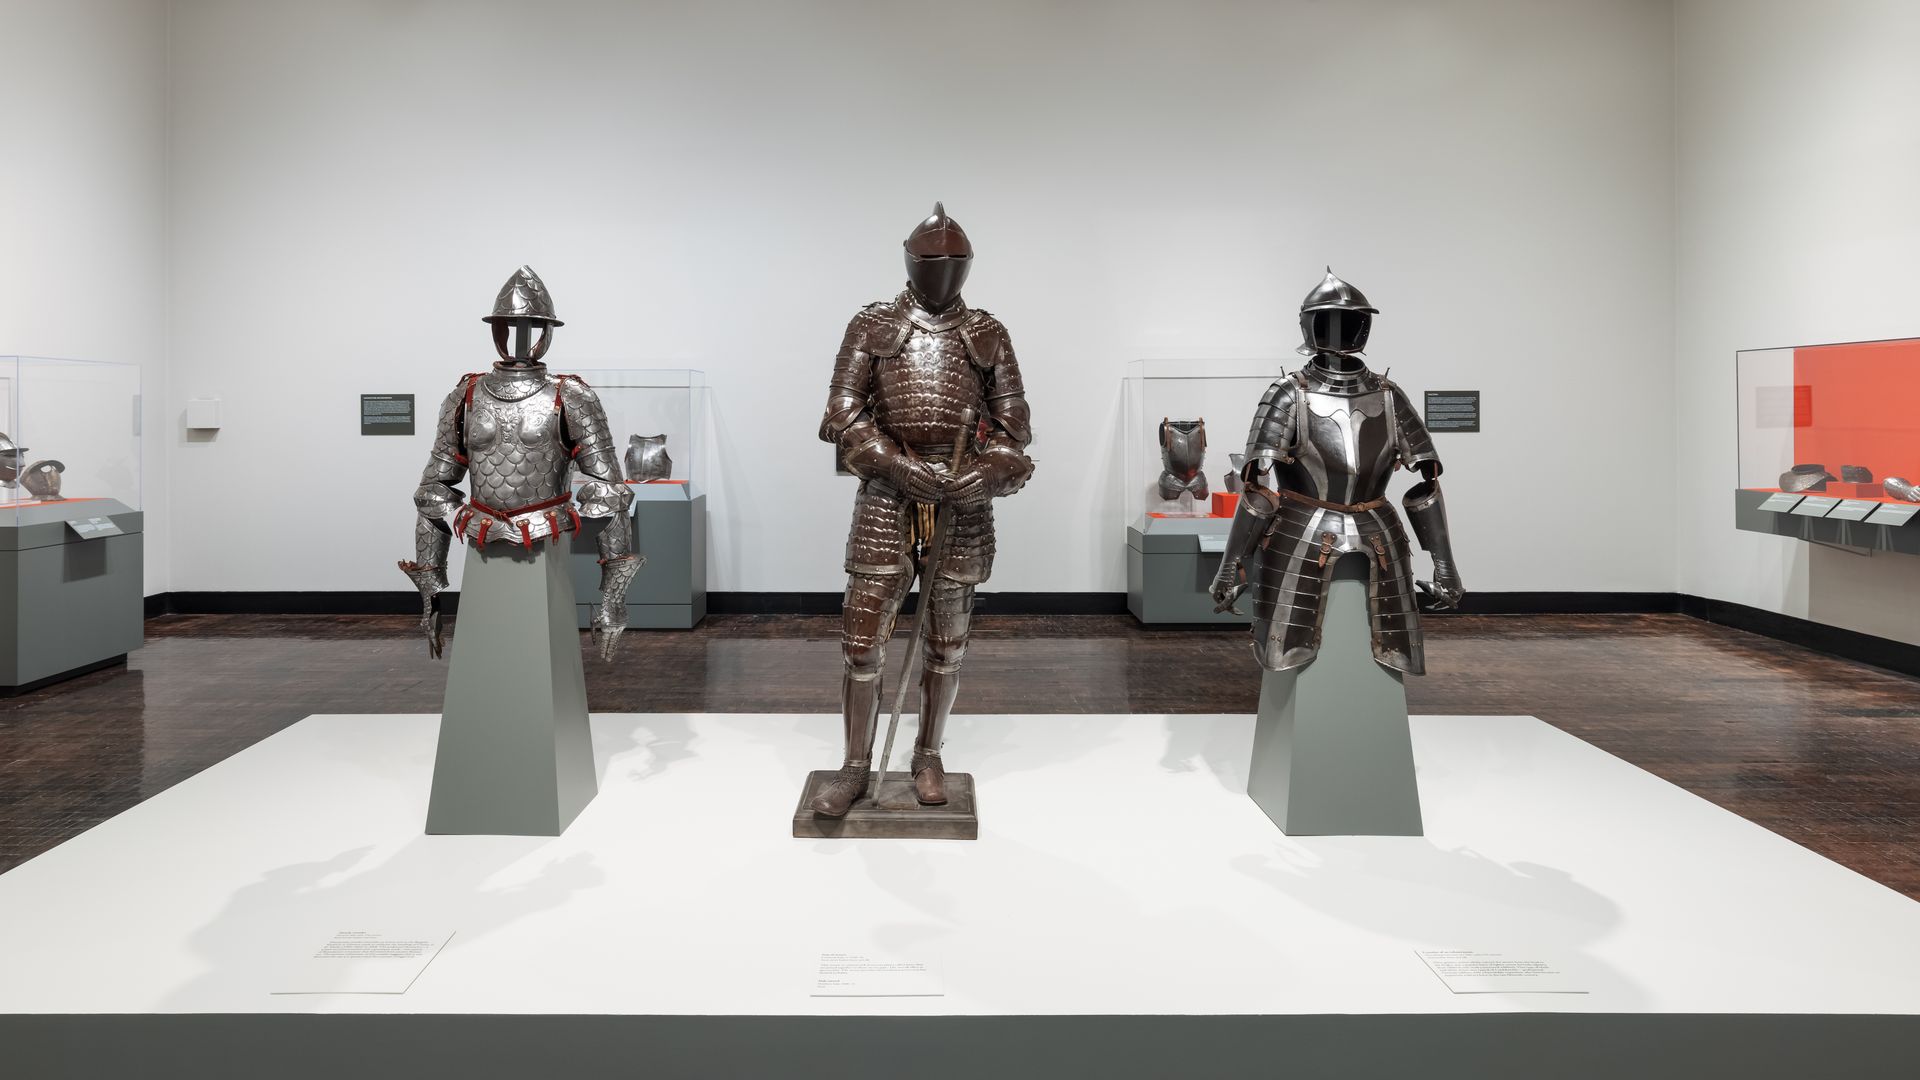 Knight armor on display